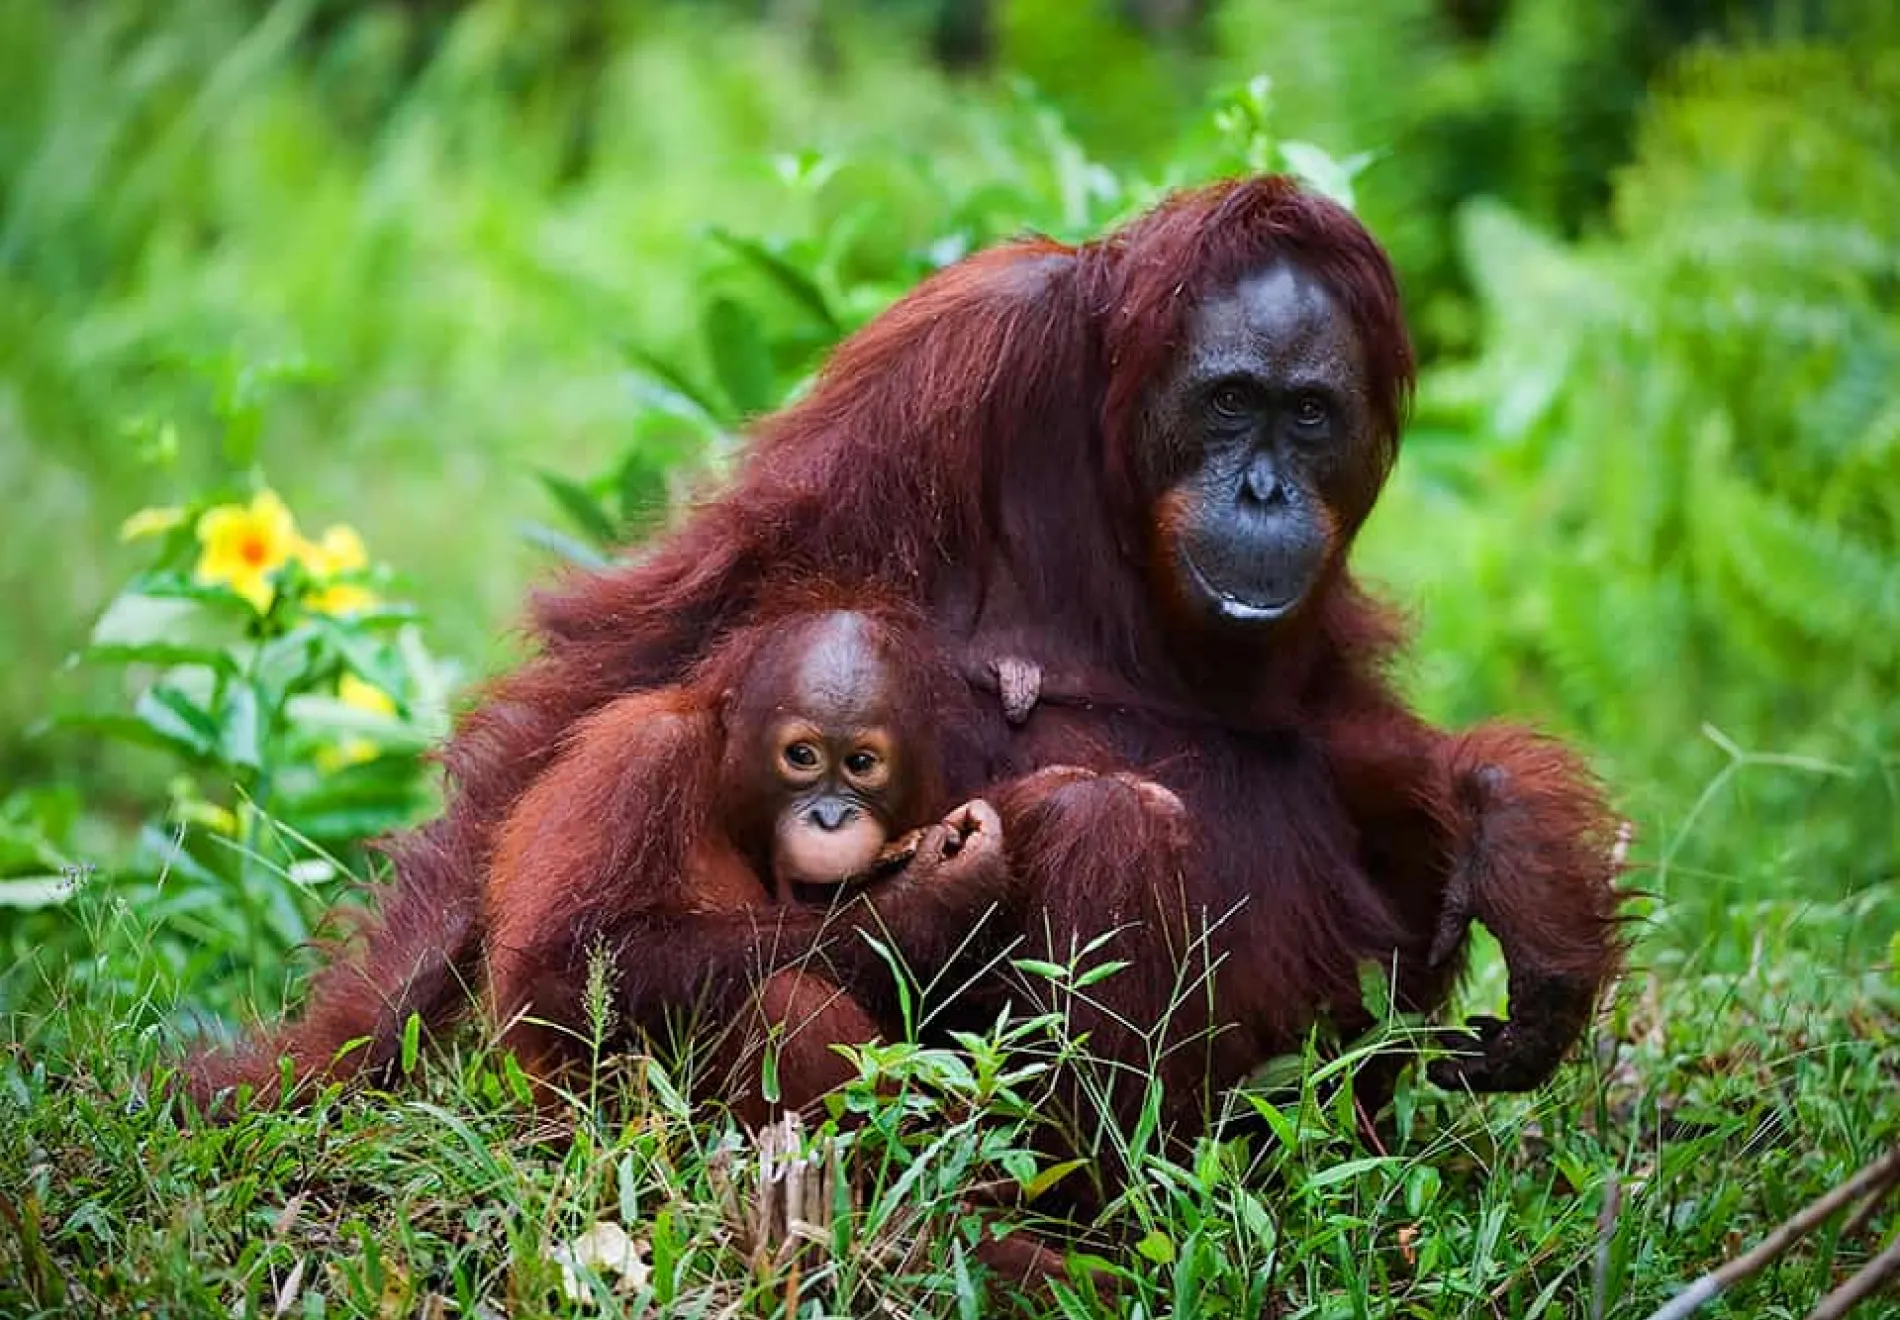 Female-orangutan-with-the-baby-on-a-grass